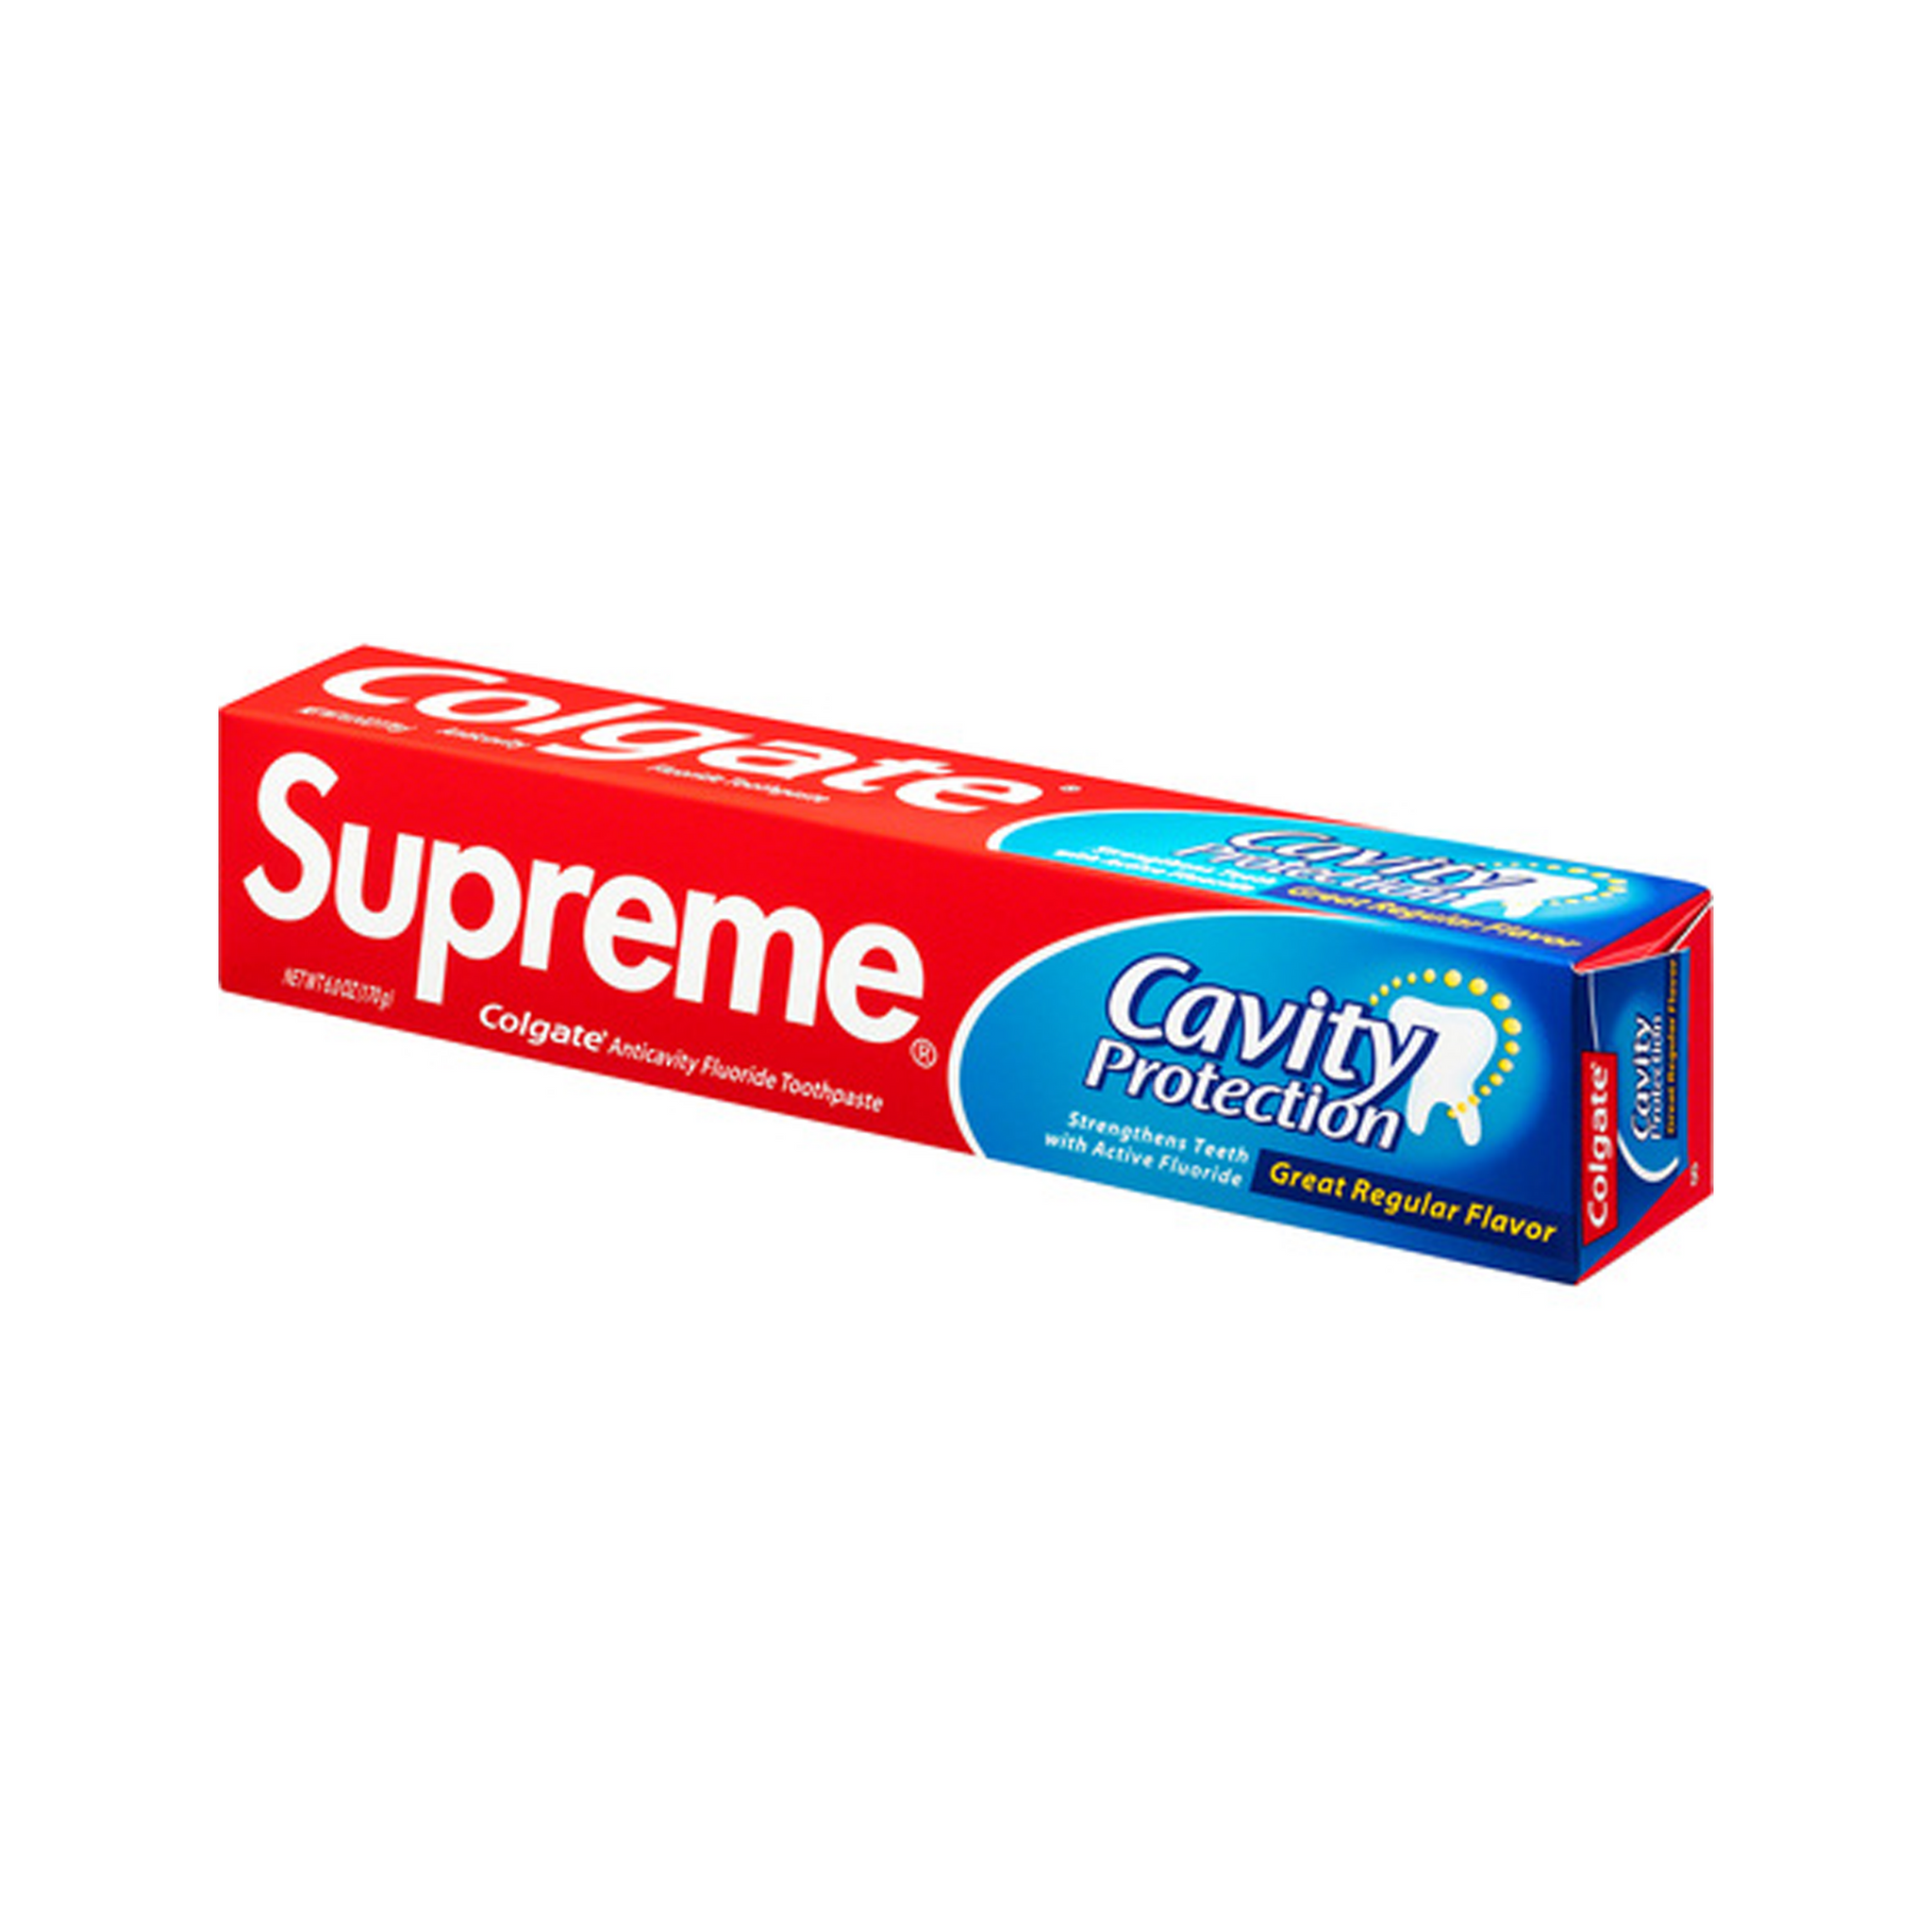 Supreme Colgate Toothpaste